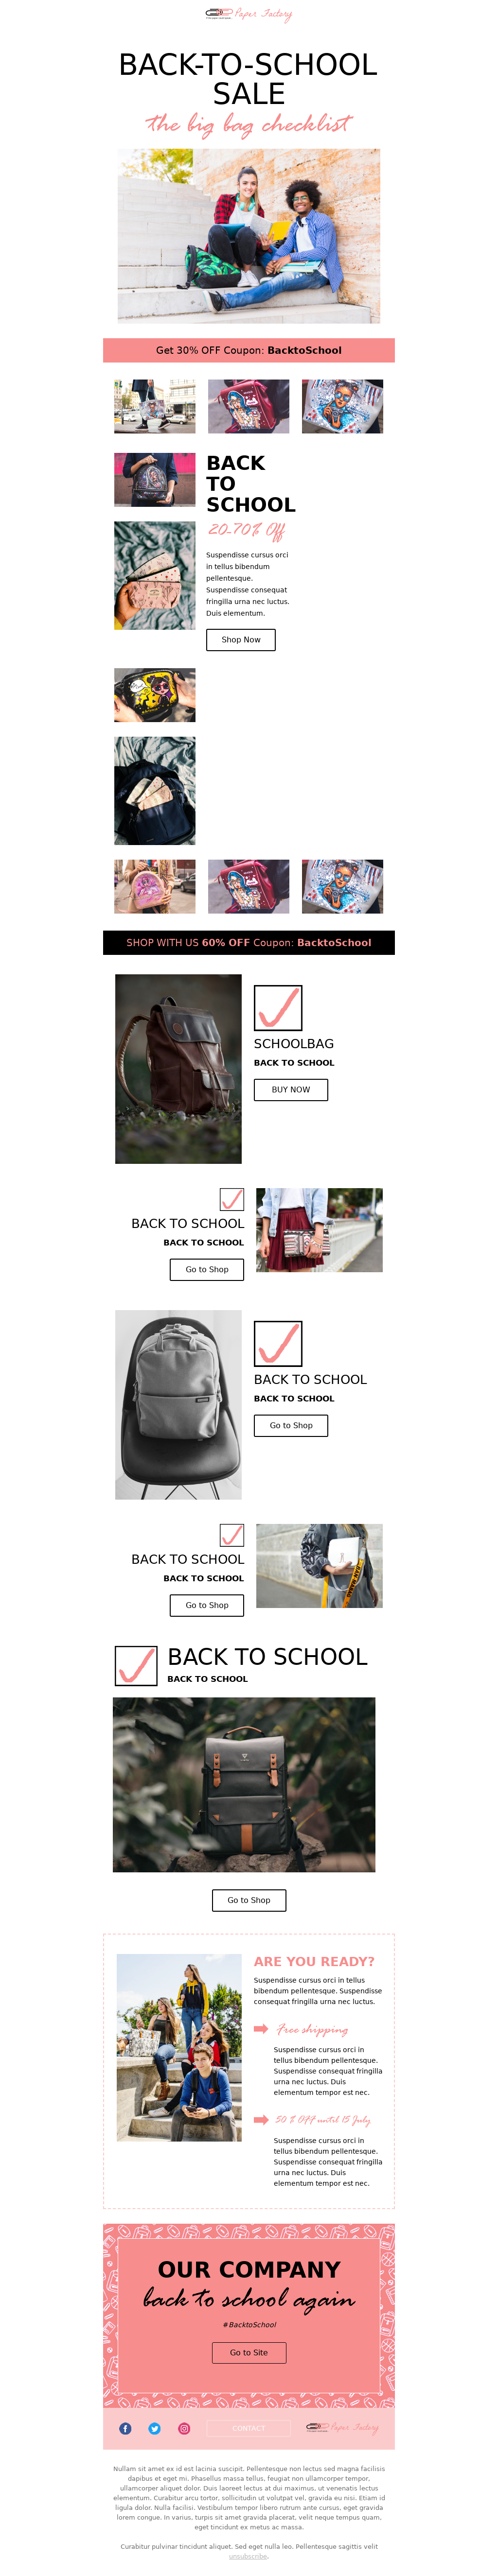 Back to School Bag Sale